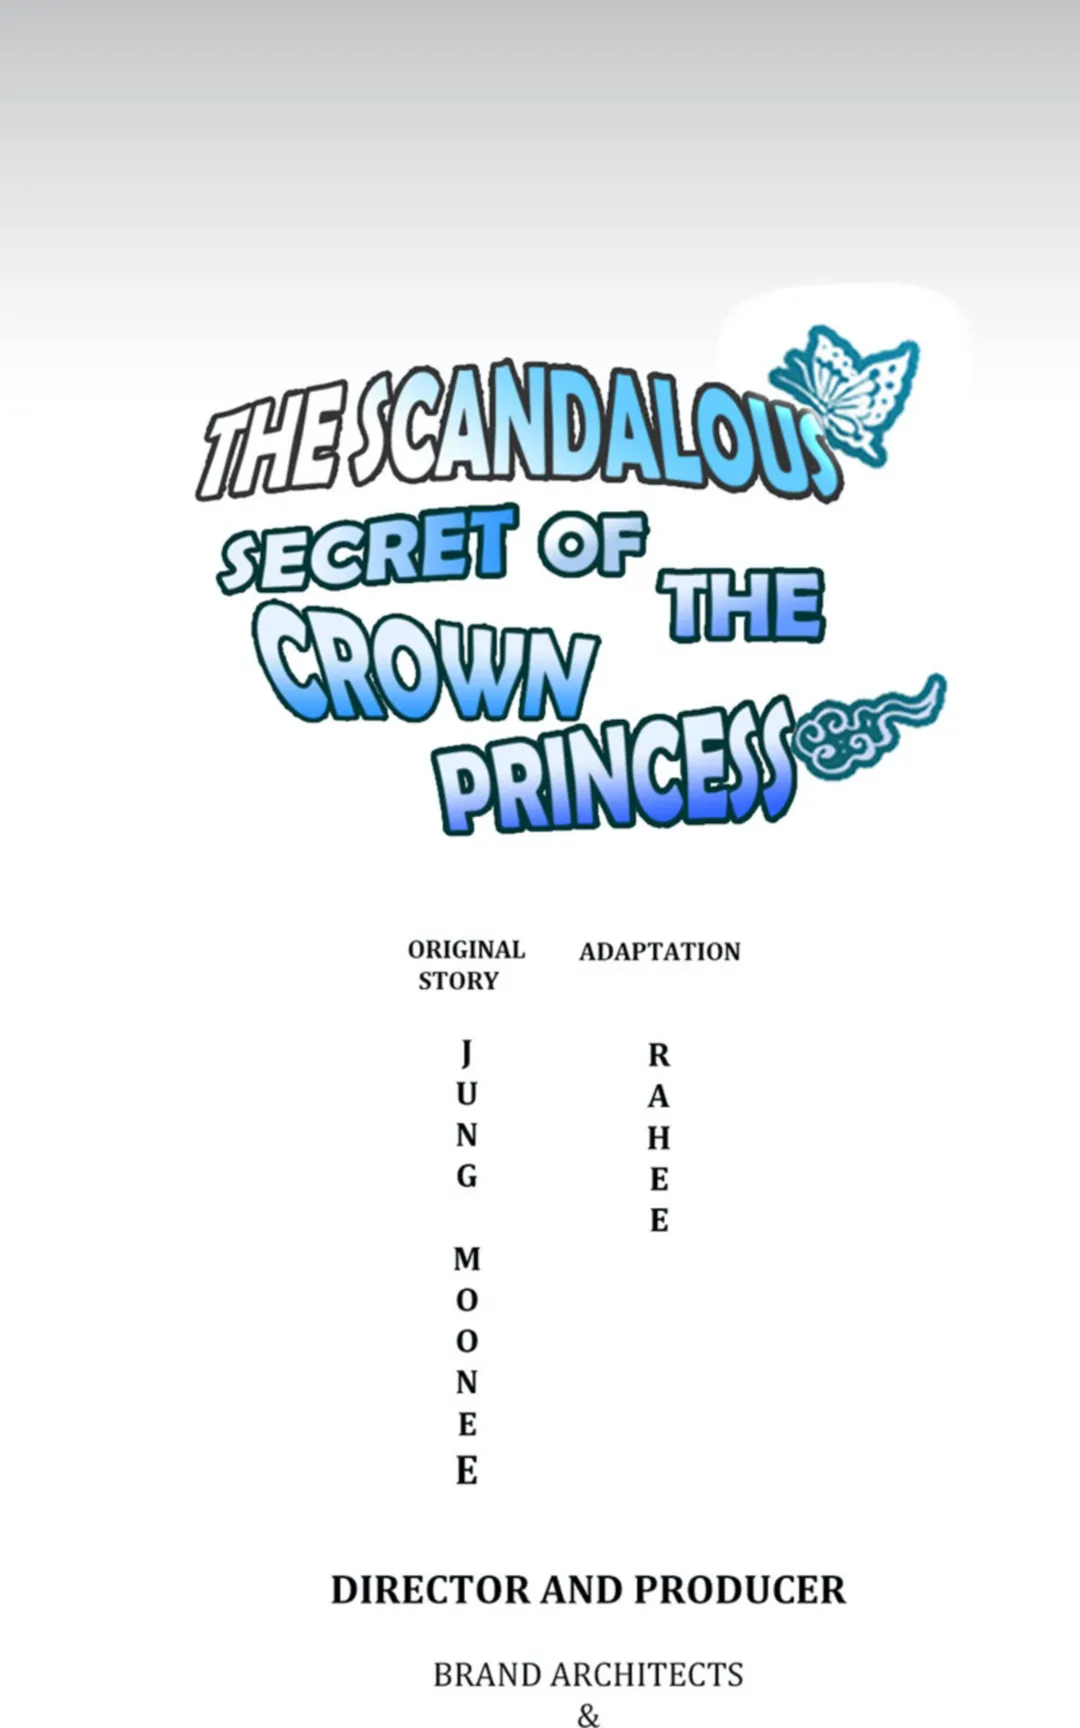 The Scandalous Secret of the Crown Princess chapter 19